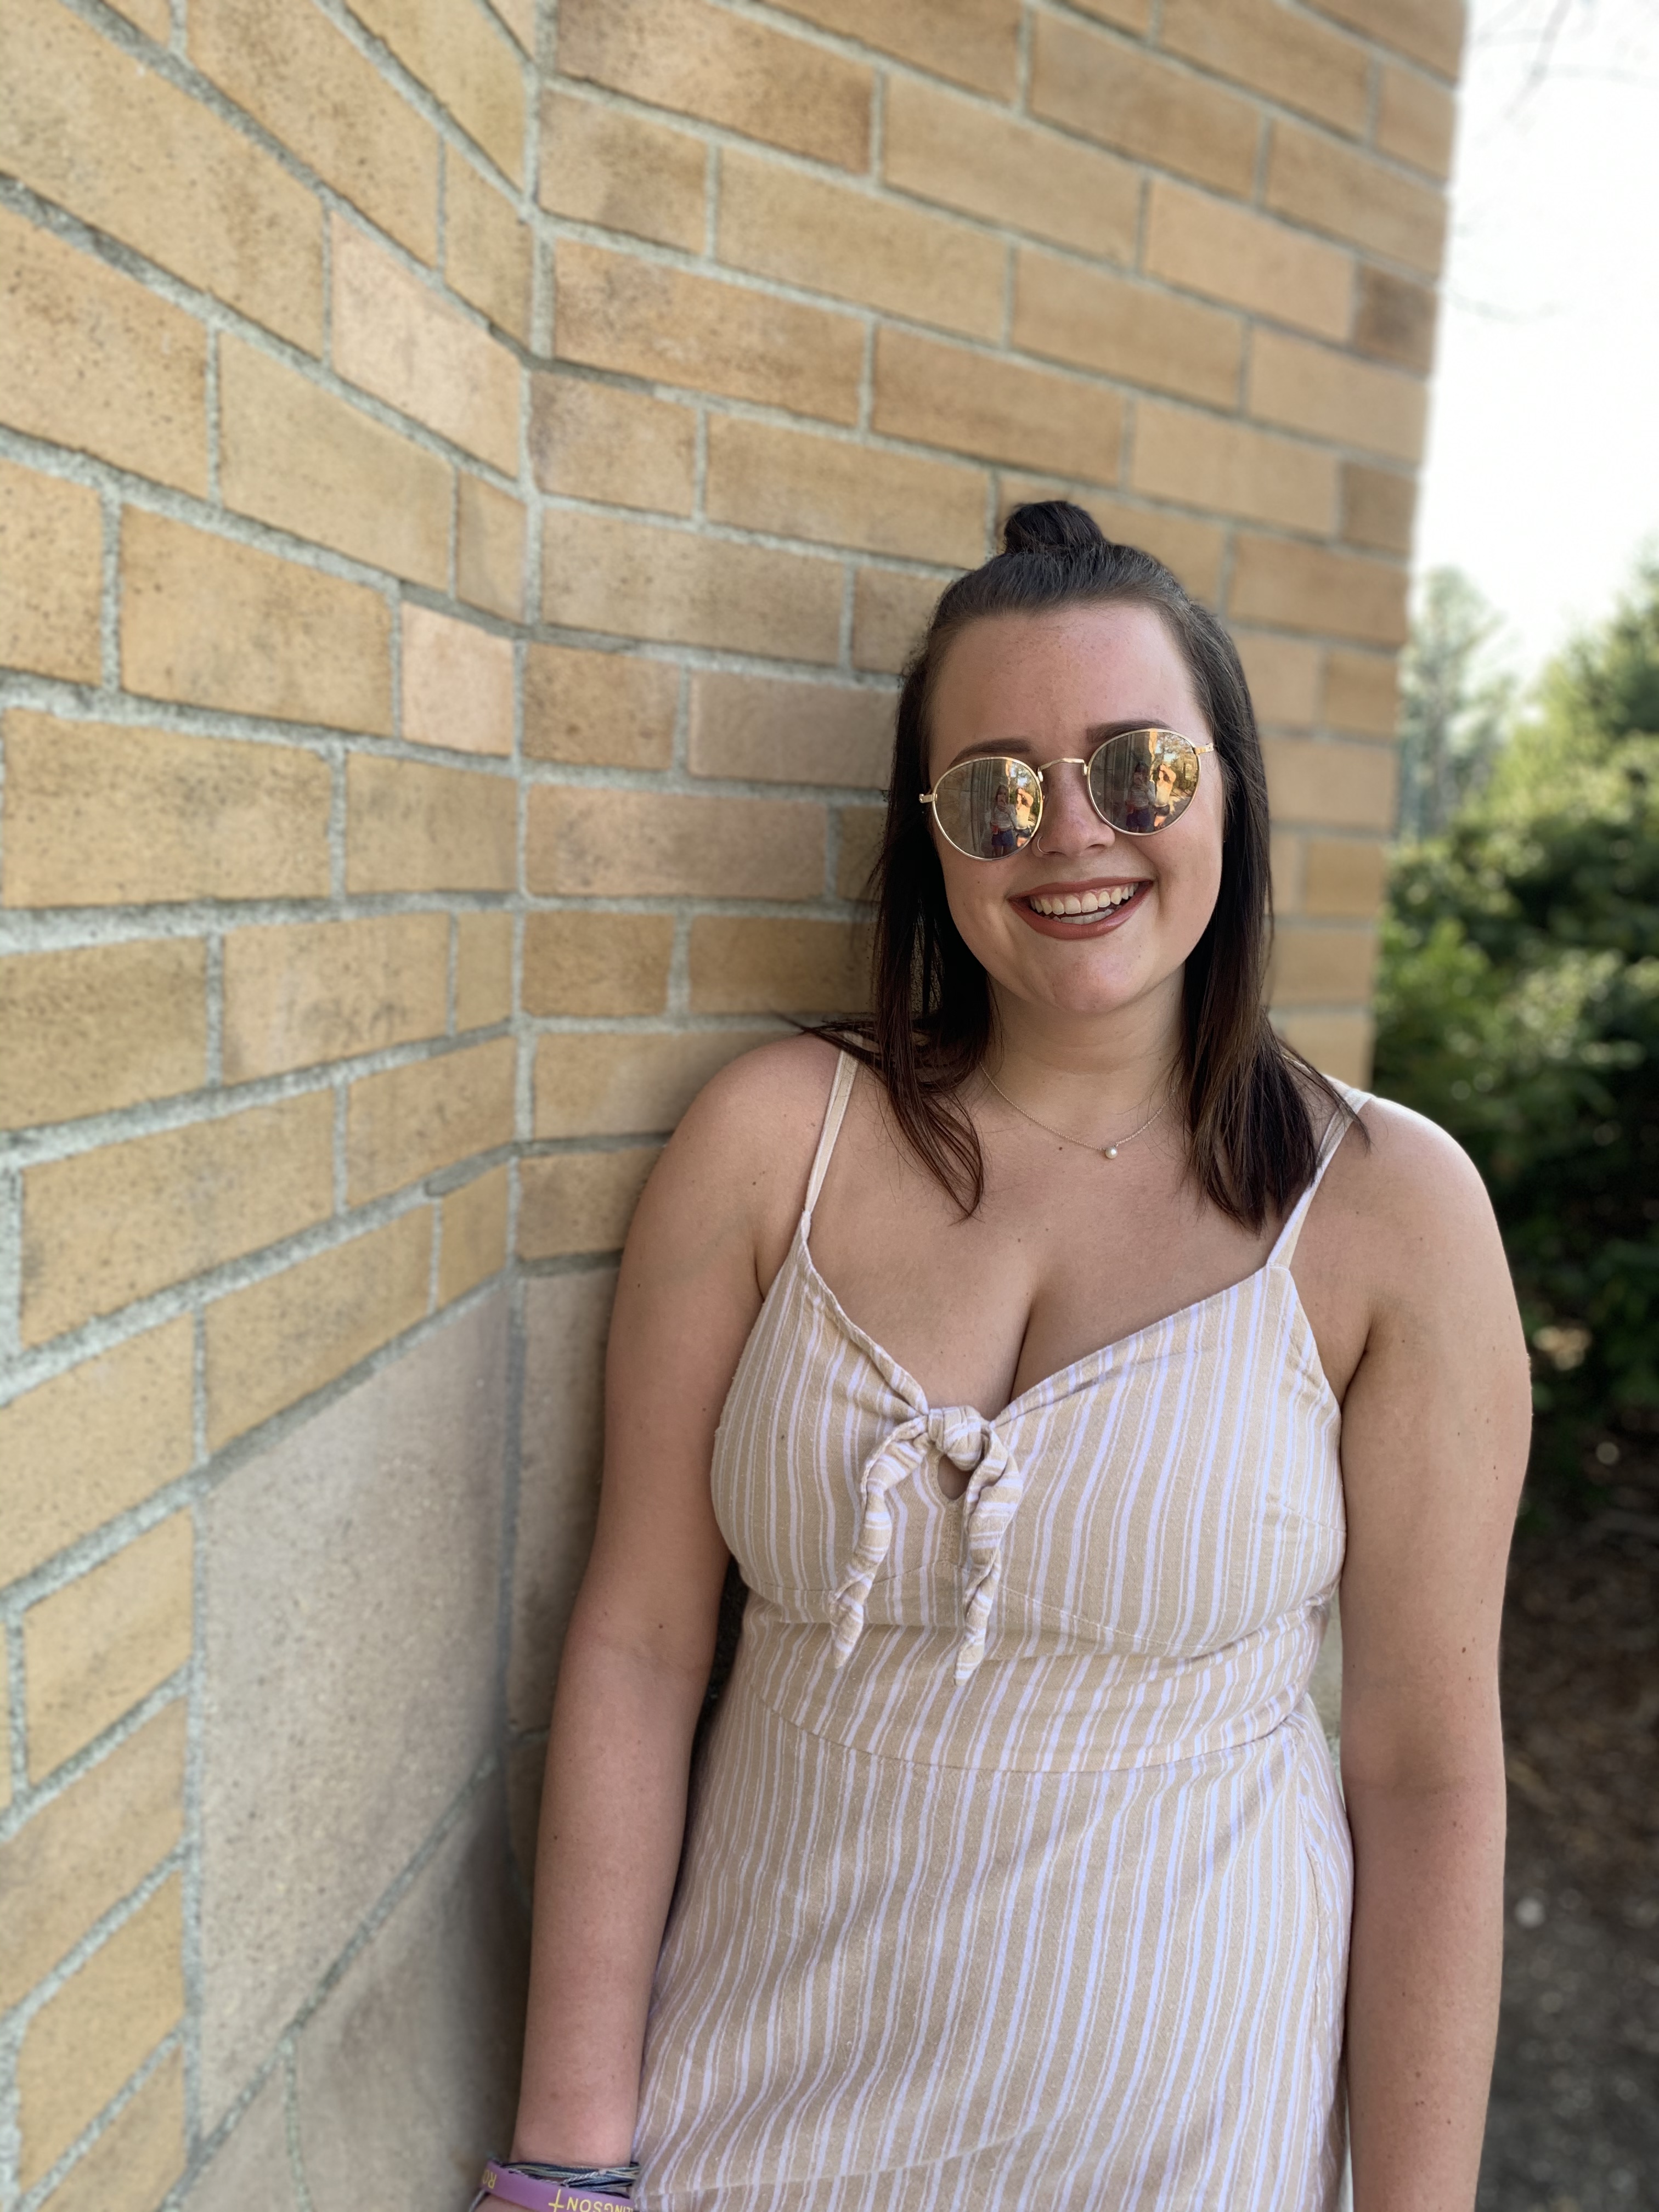 Lizzie Hannan wearing sunglasses outdoors next to a brick wall